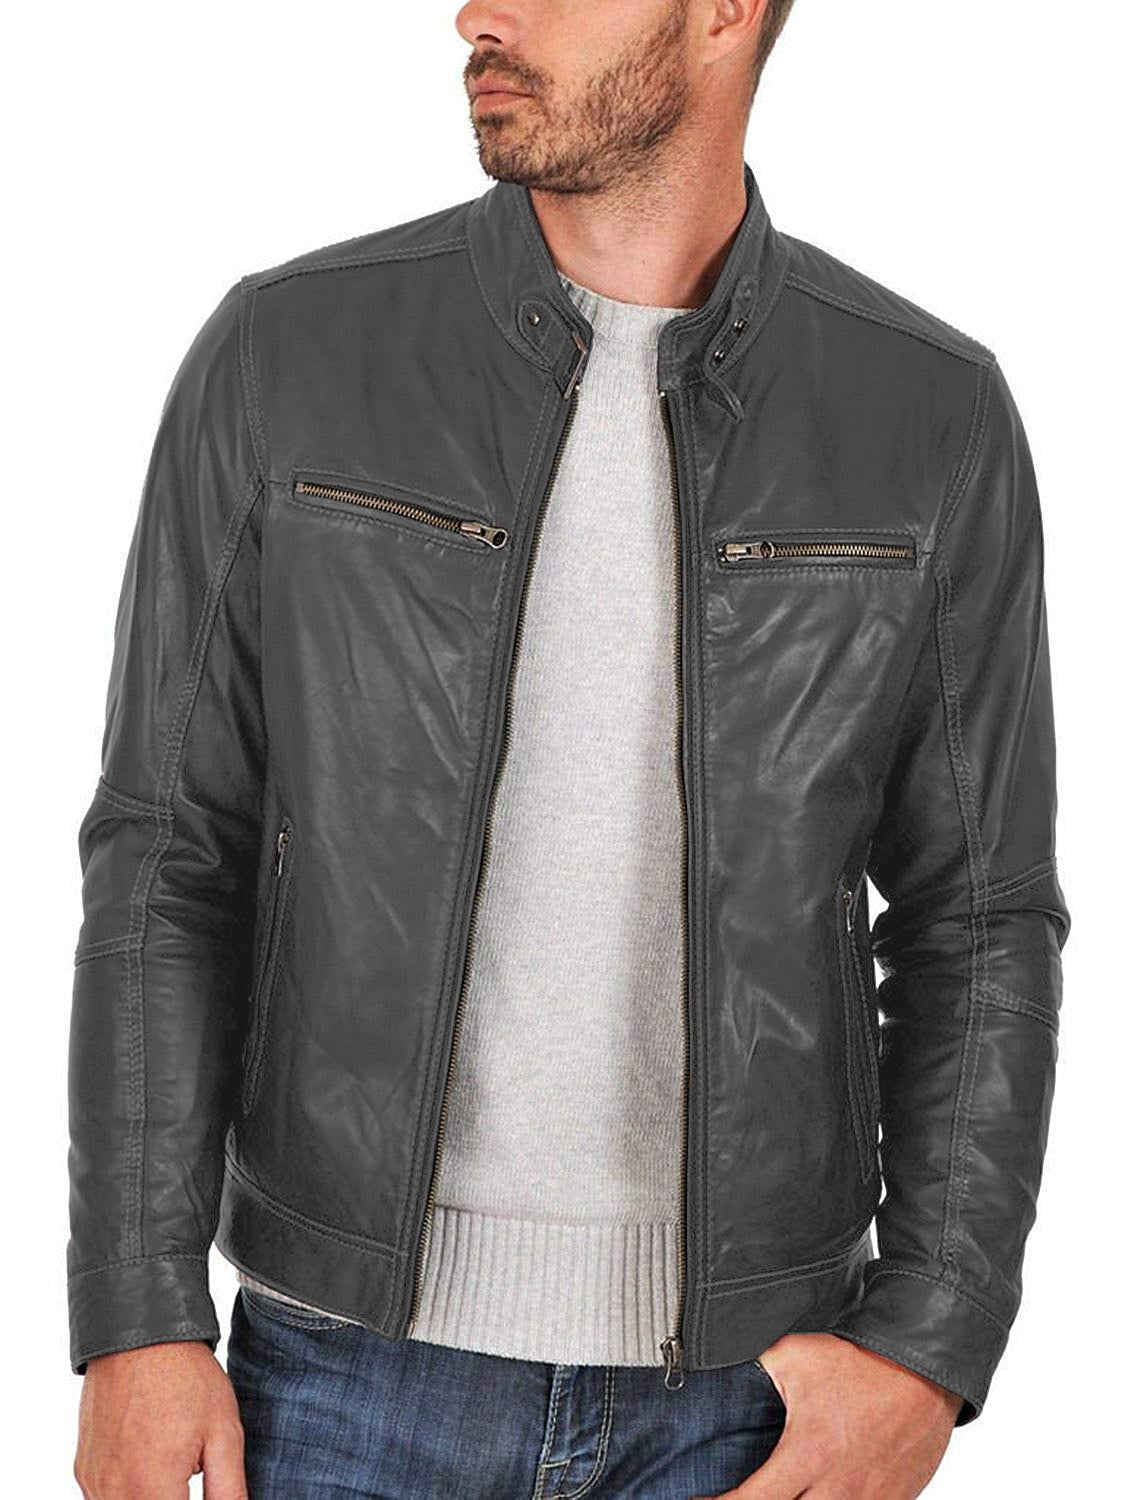 Leather Jackets Hub Mens Genuine Lambskin Leather Jacket (Black, Racer Jacket) - 1501254